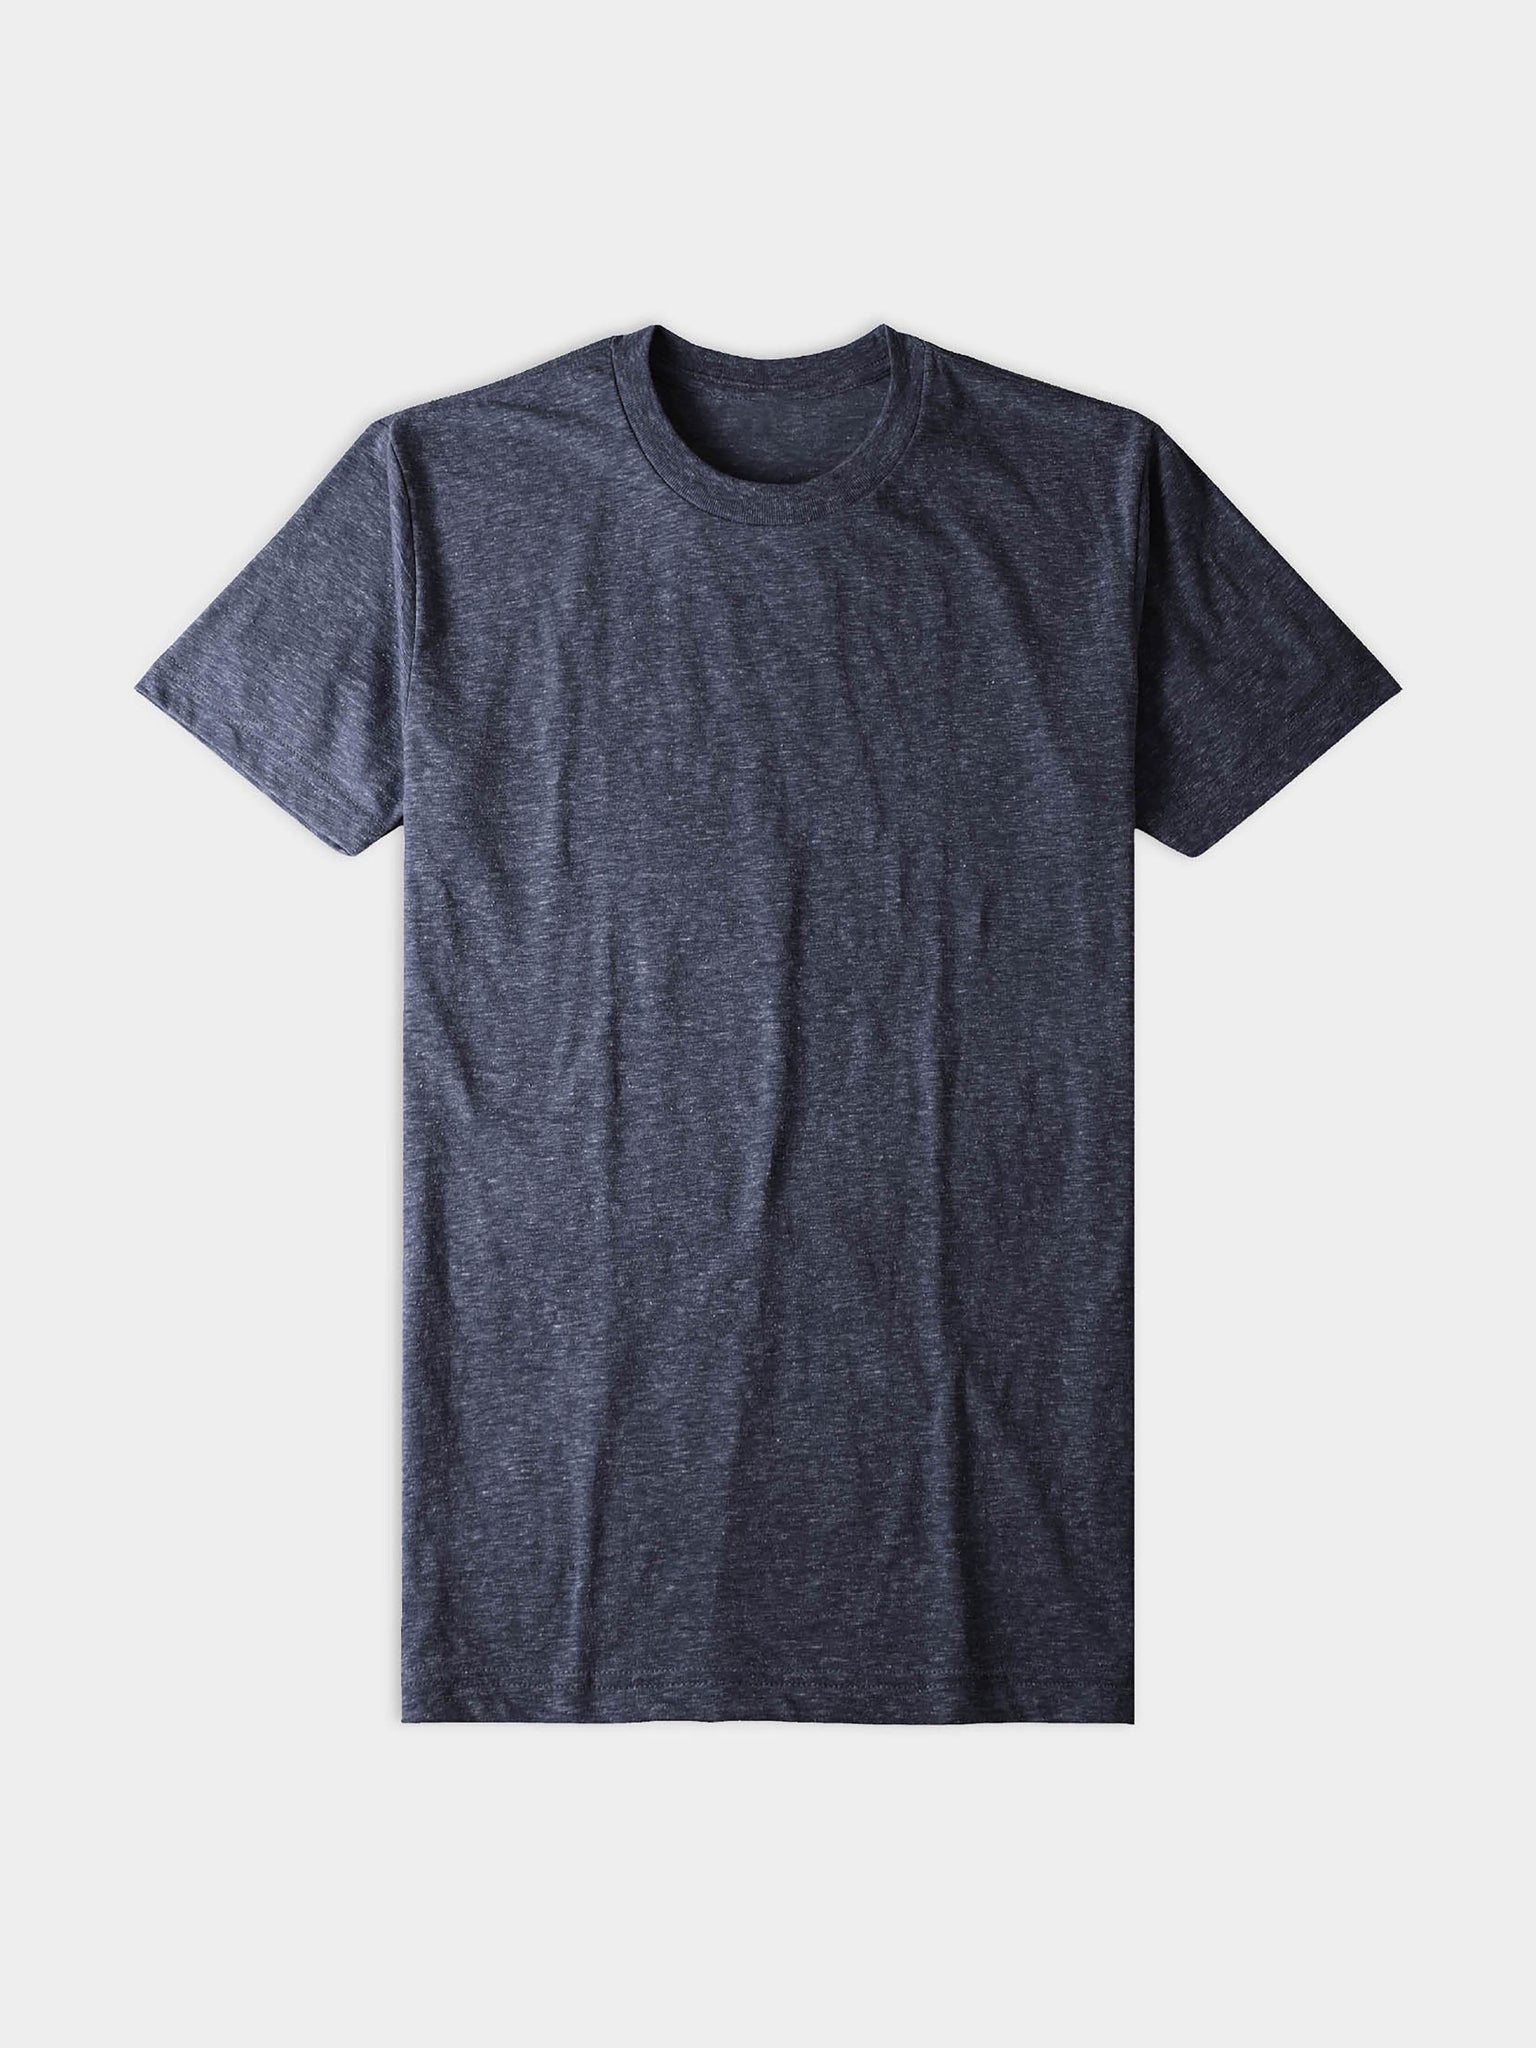 Men's Tri-Blend T-Shirts